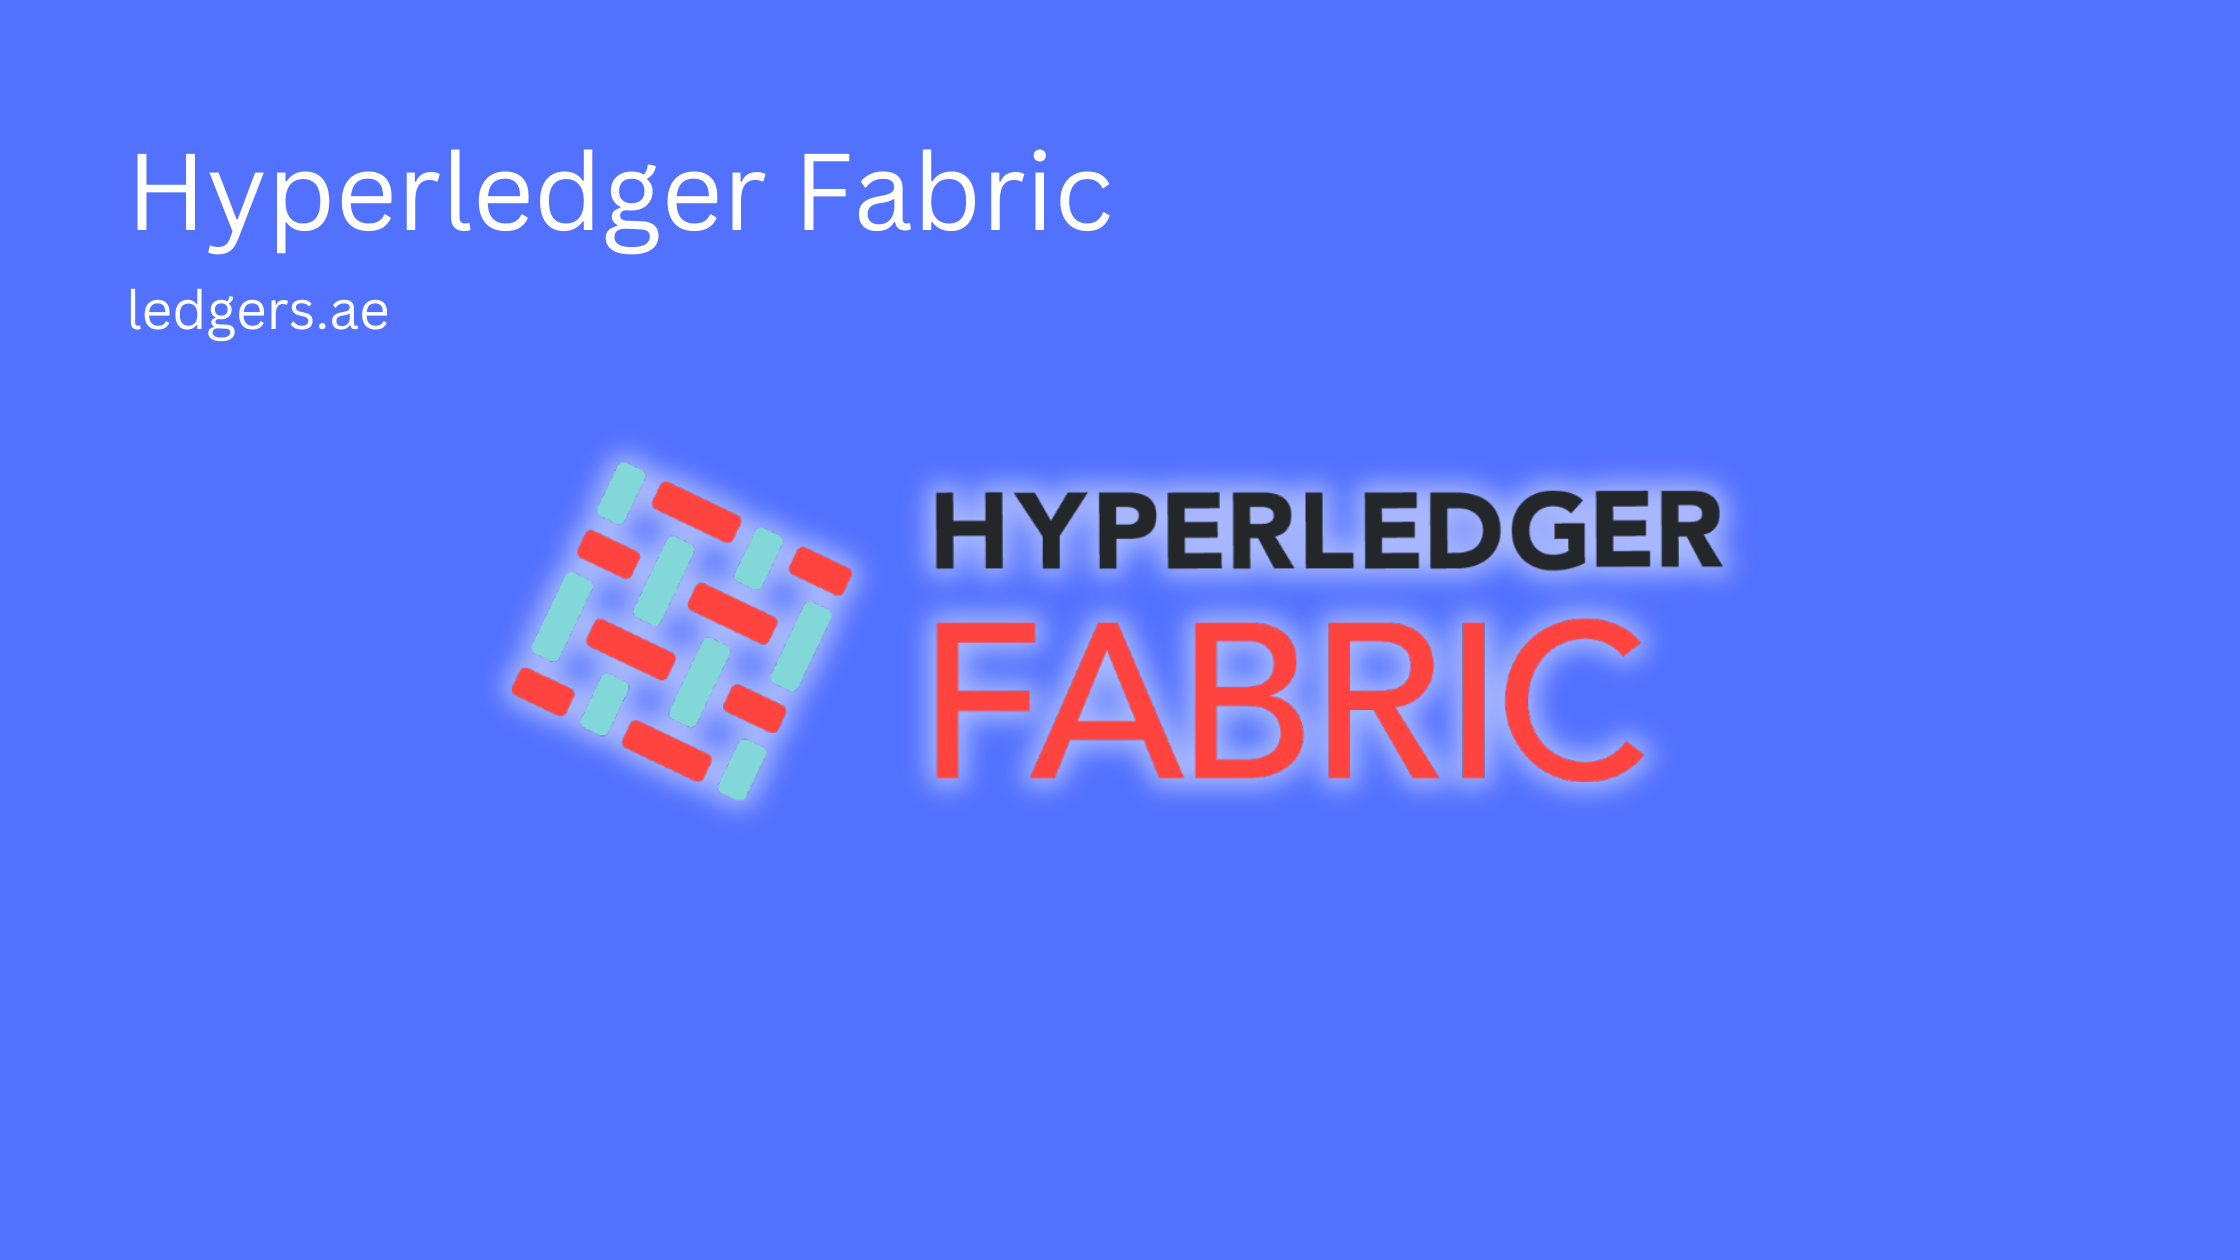 Hyperledger Fabric - a blockchain framework